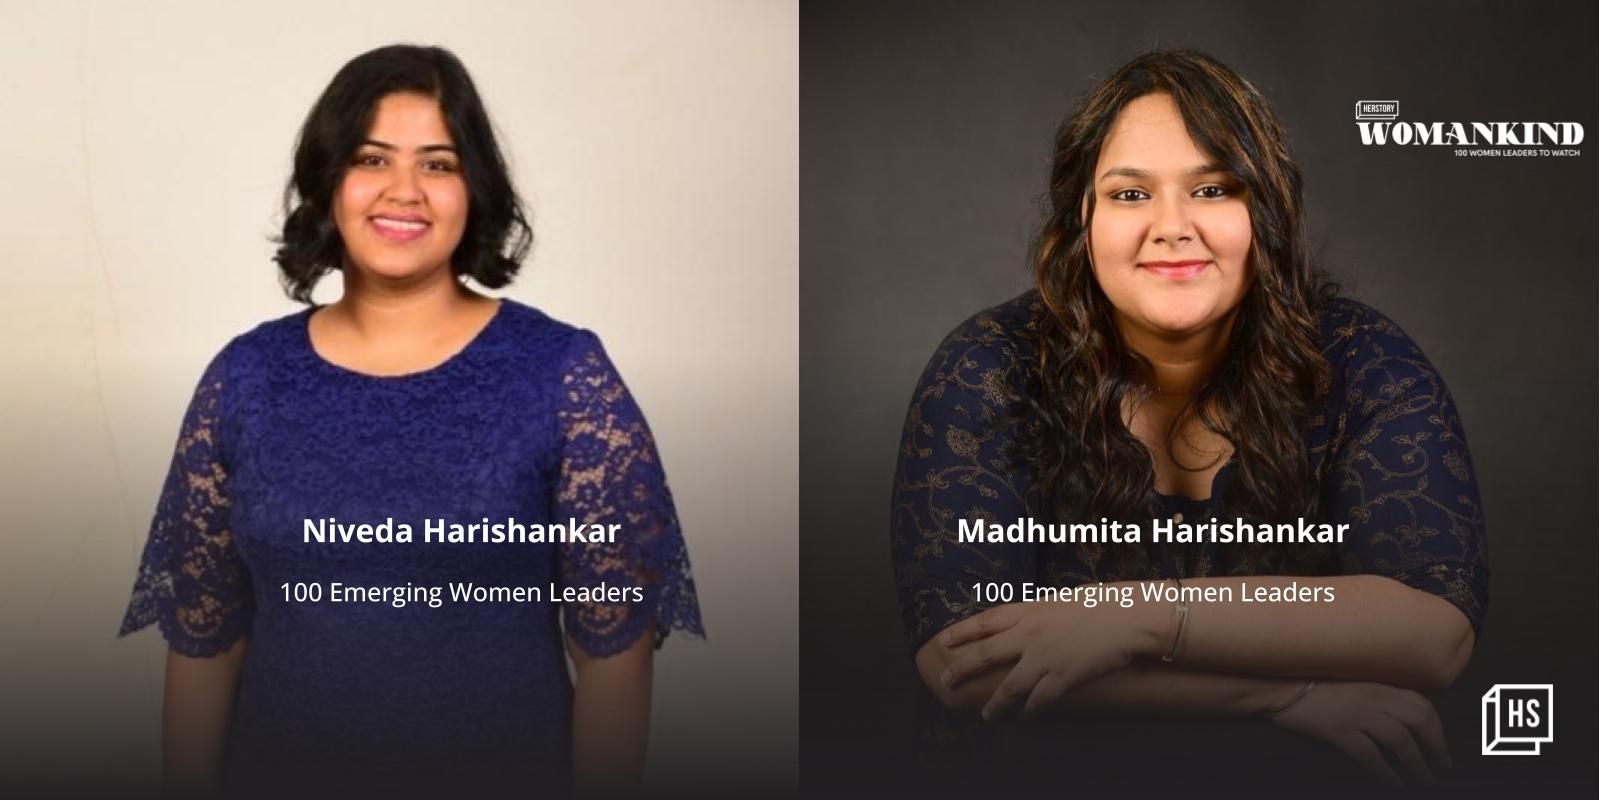 [100 Emerging Women Leaders] Nume Crypto founders Madhumitha and Niveda Harishankar on starting up  

